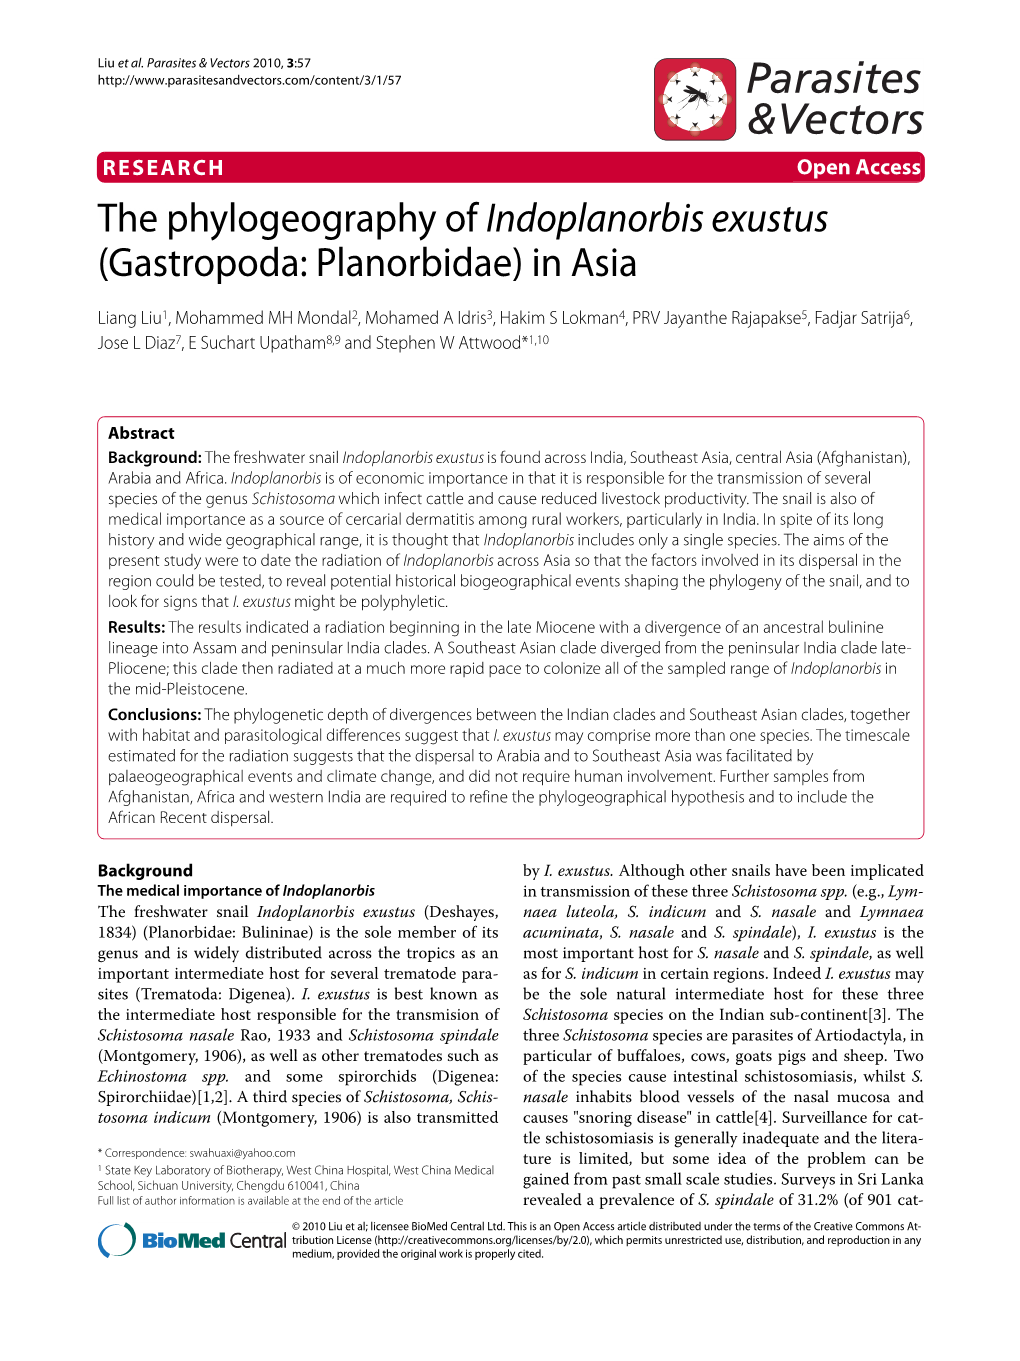 The Phylogeography of Indoplanorbis Exustus (Gastropoda: Planorbidae) in Asia Parasites & Vectors 2010, 3:57